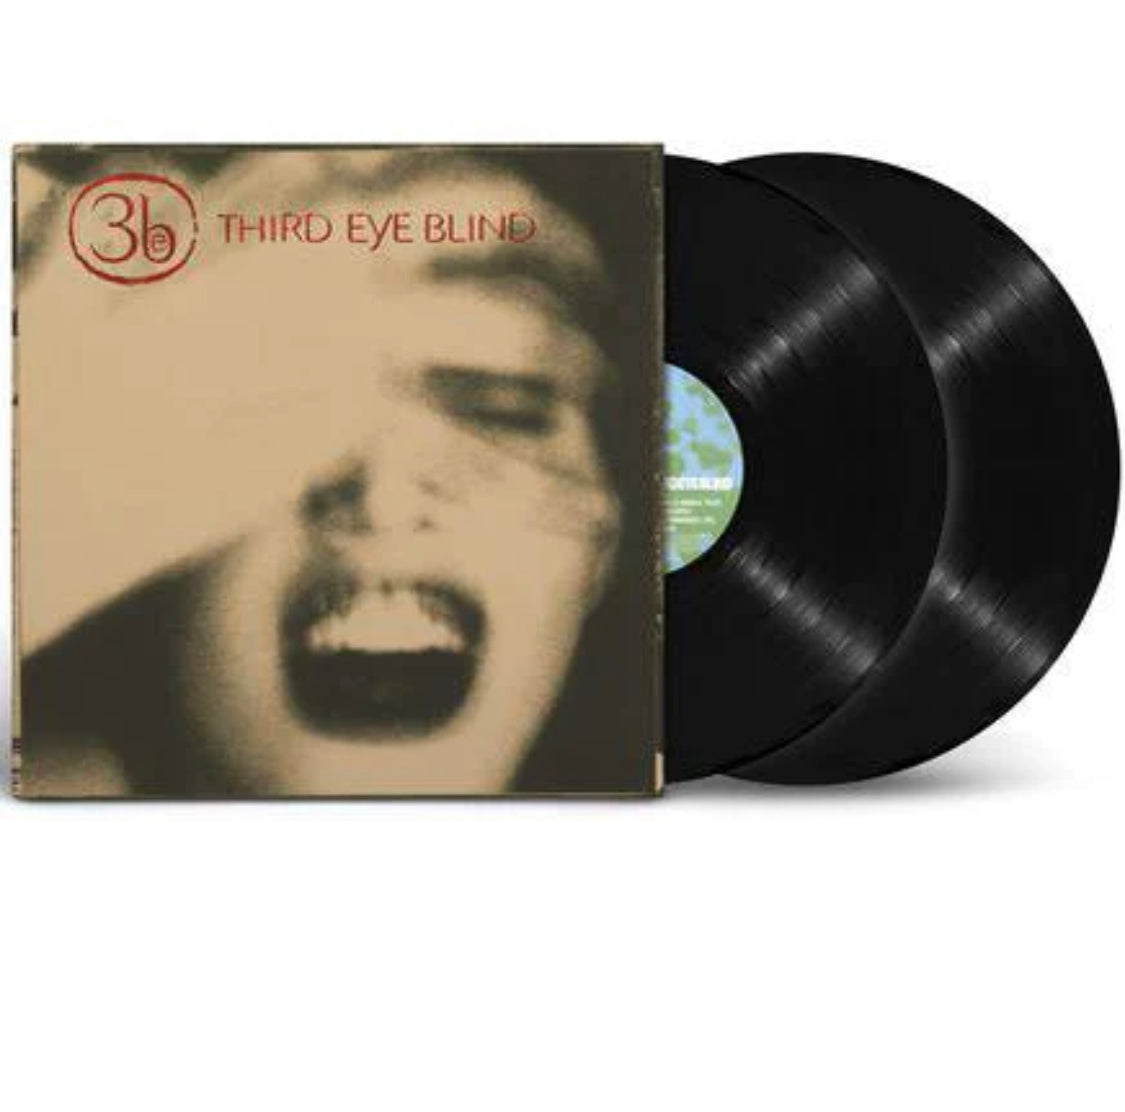 Third Eye Blind- Third Eye Blind w/Alternate Cover (Distro Title)